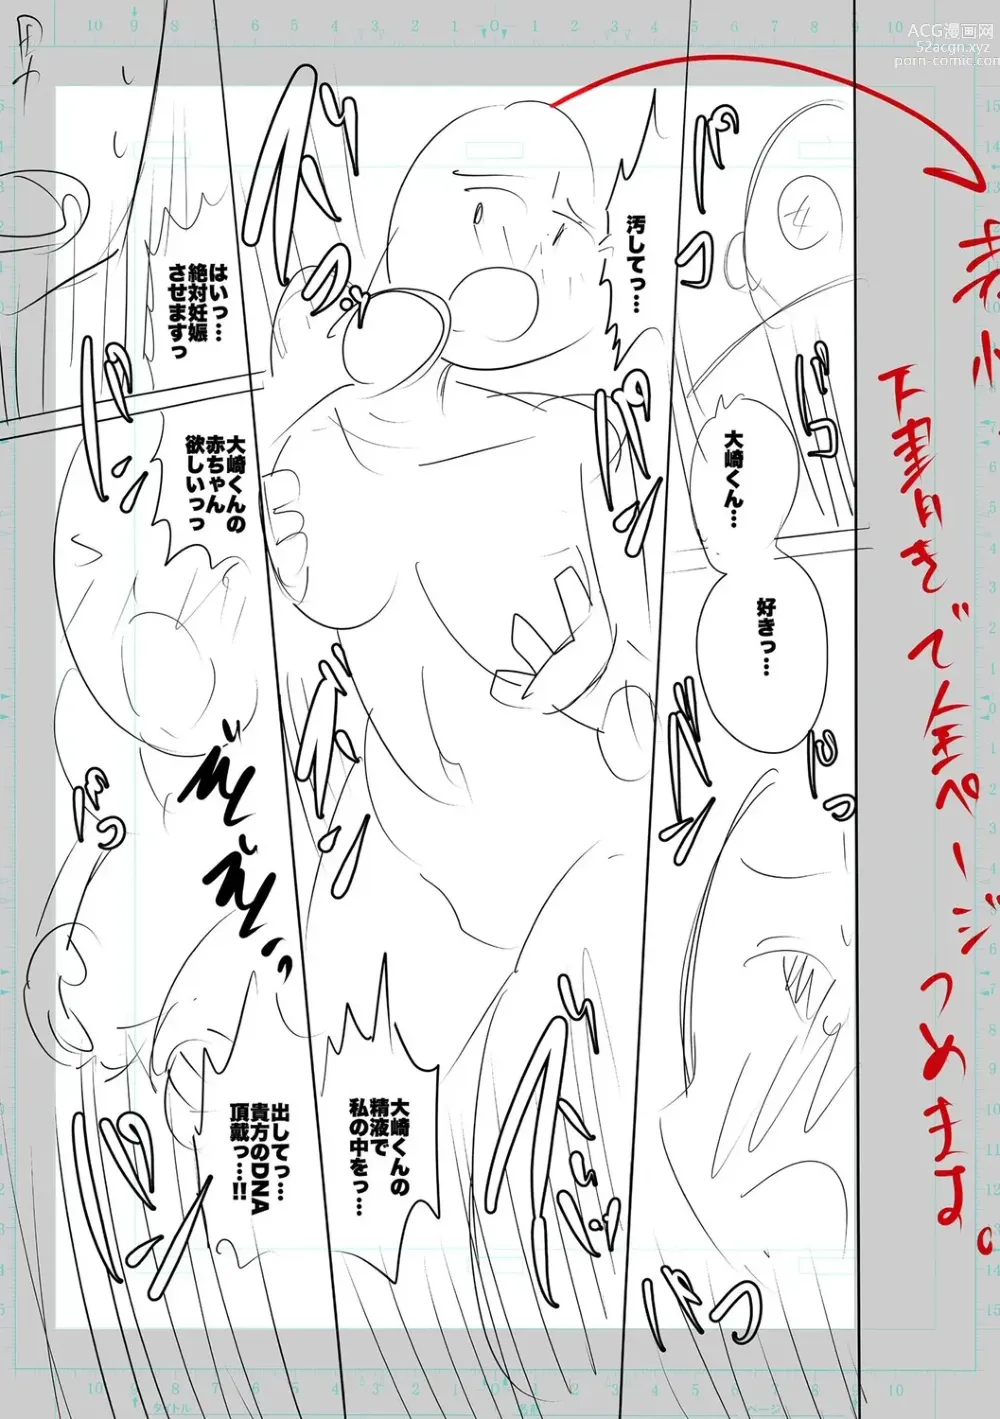 Page 305 of manga SEIYOKU SPLASH